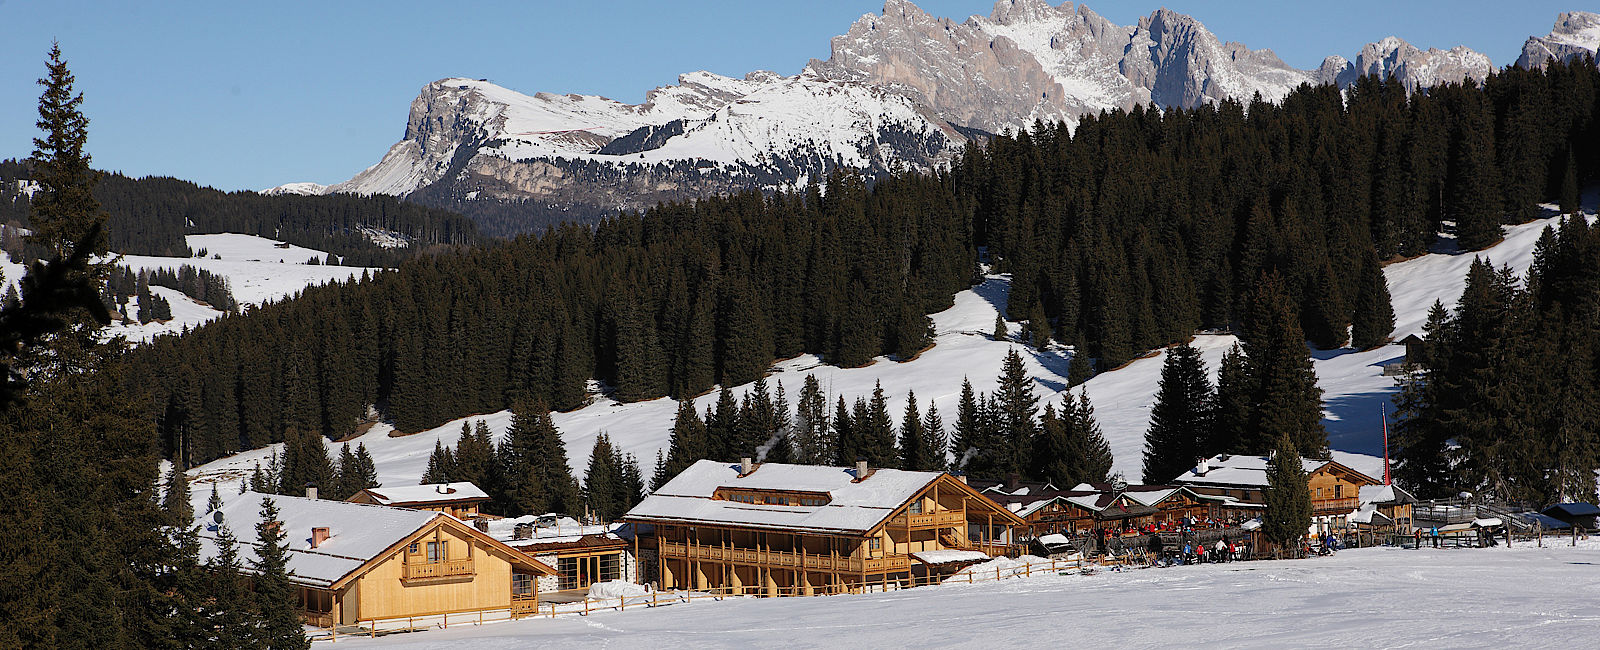 WEITERE NEWS
 Tirler-Dolomites Living Hotel: Detox im Winter 
